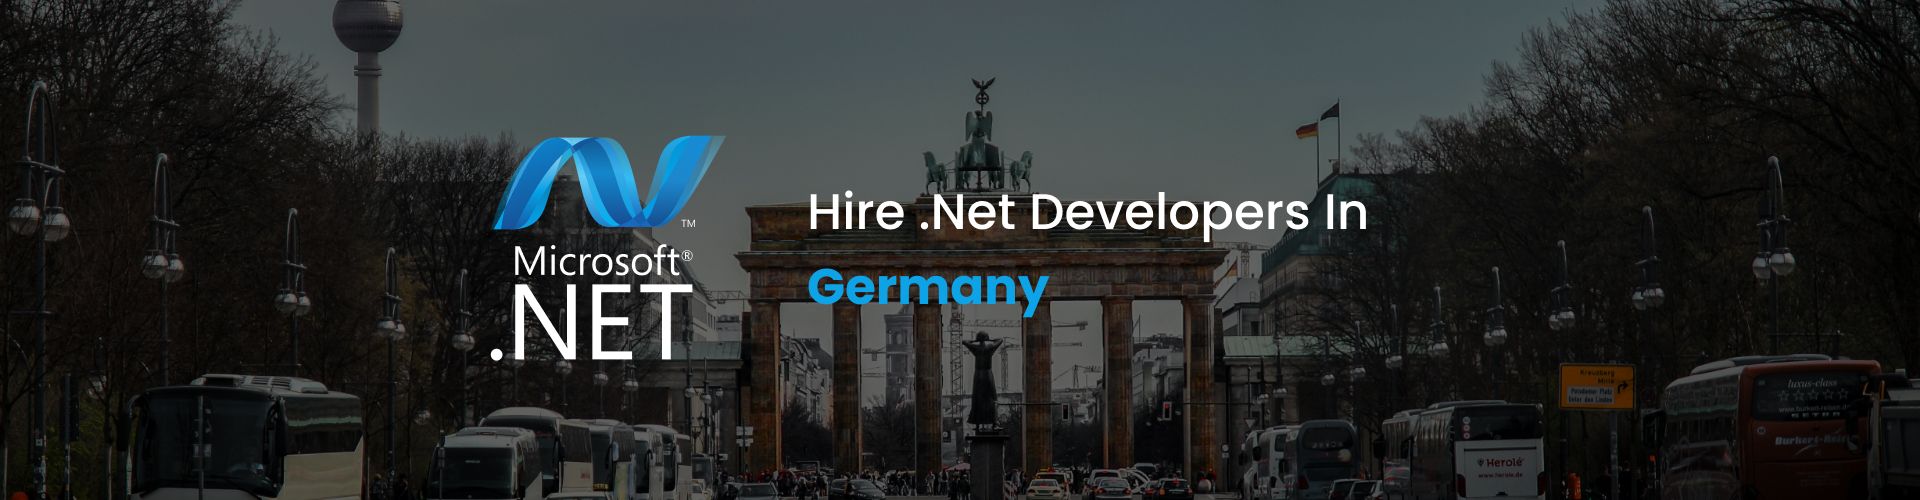 hire .net developers in germany